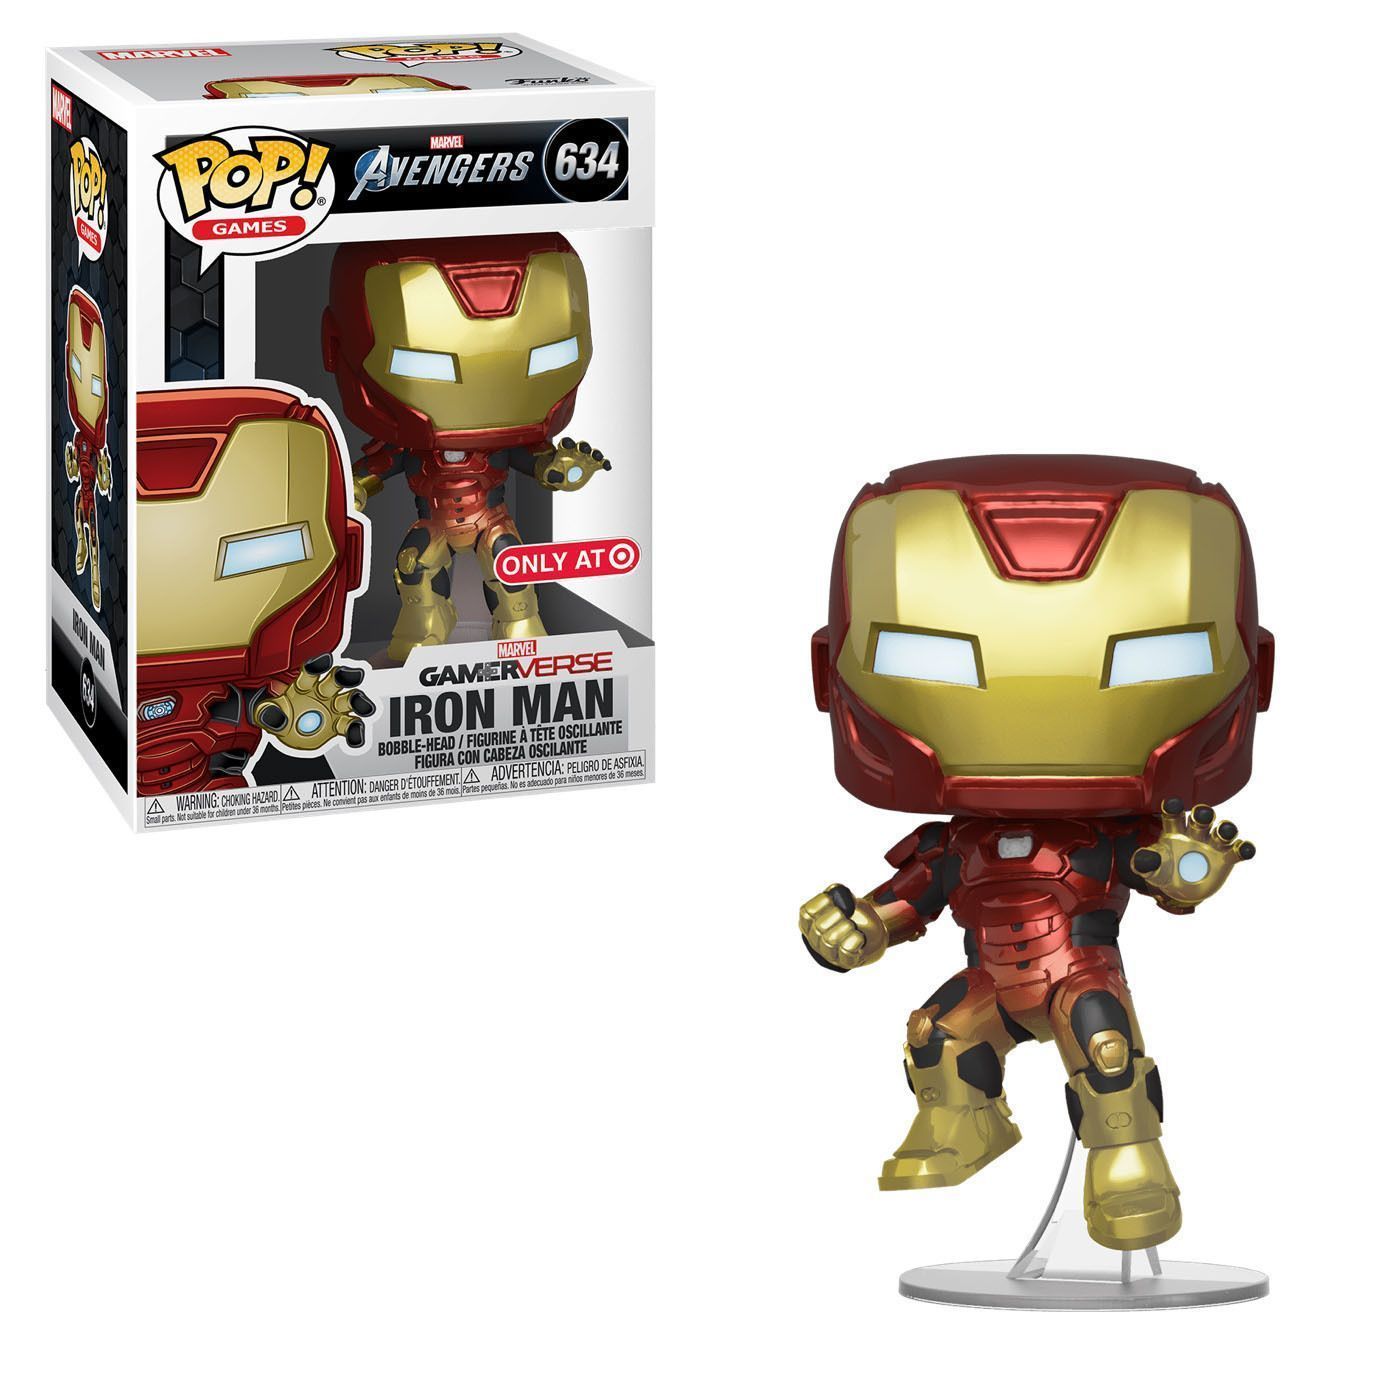 Funko Pop! Iron Man (Avengers Game) (Action Pose)